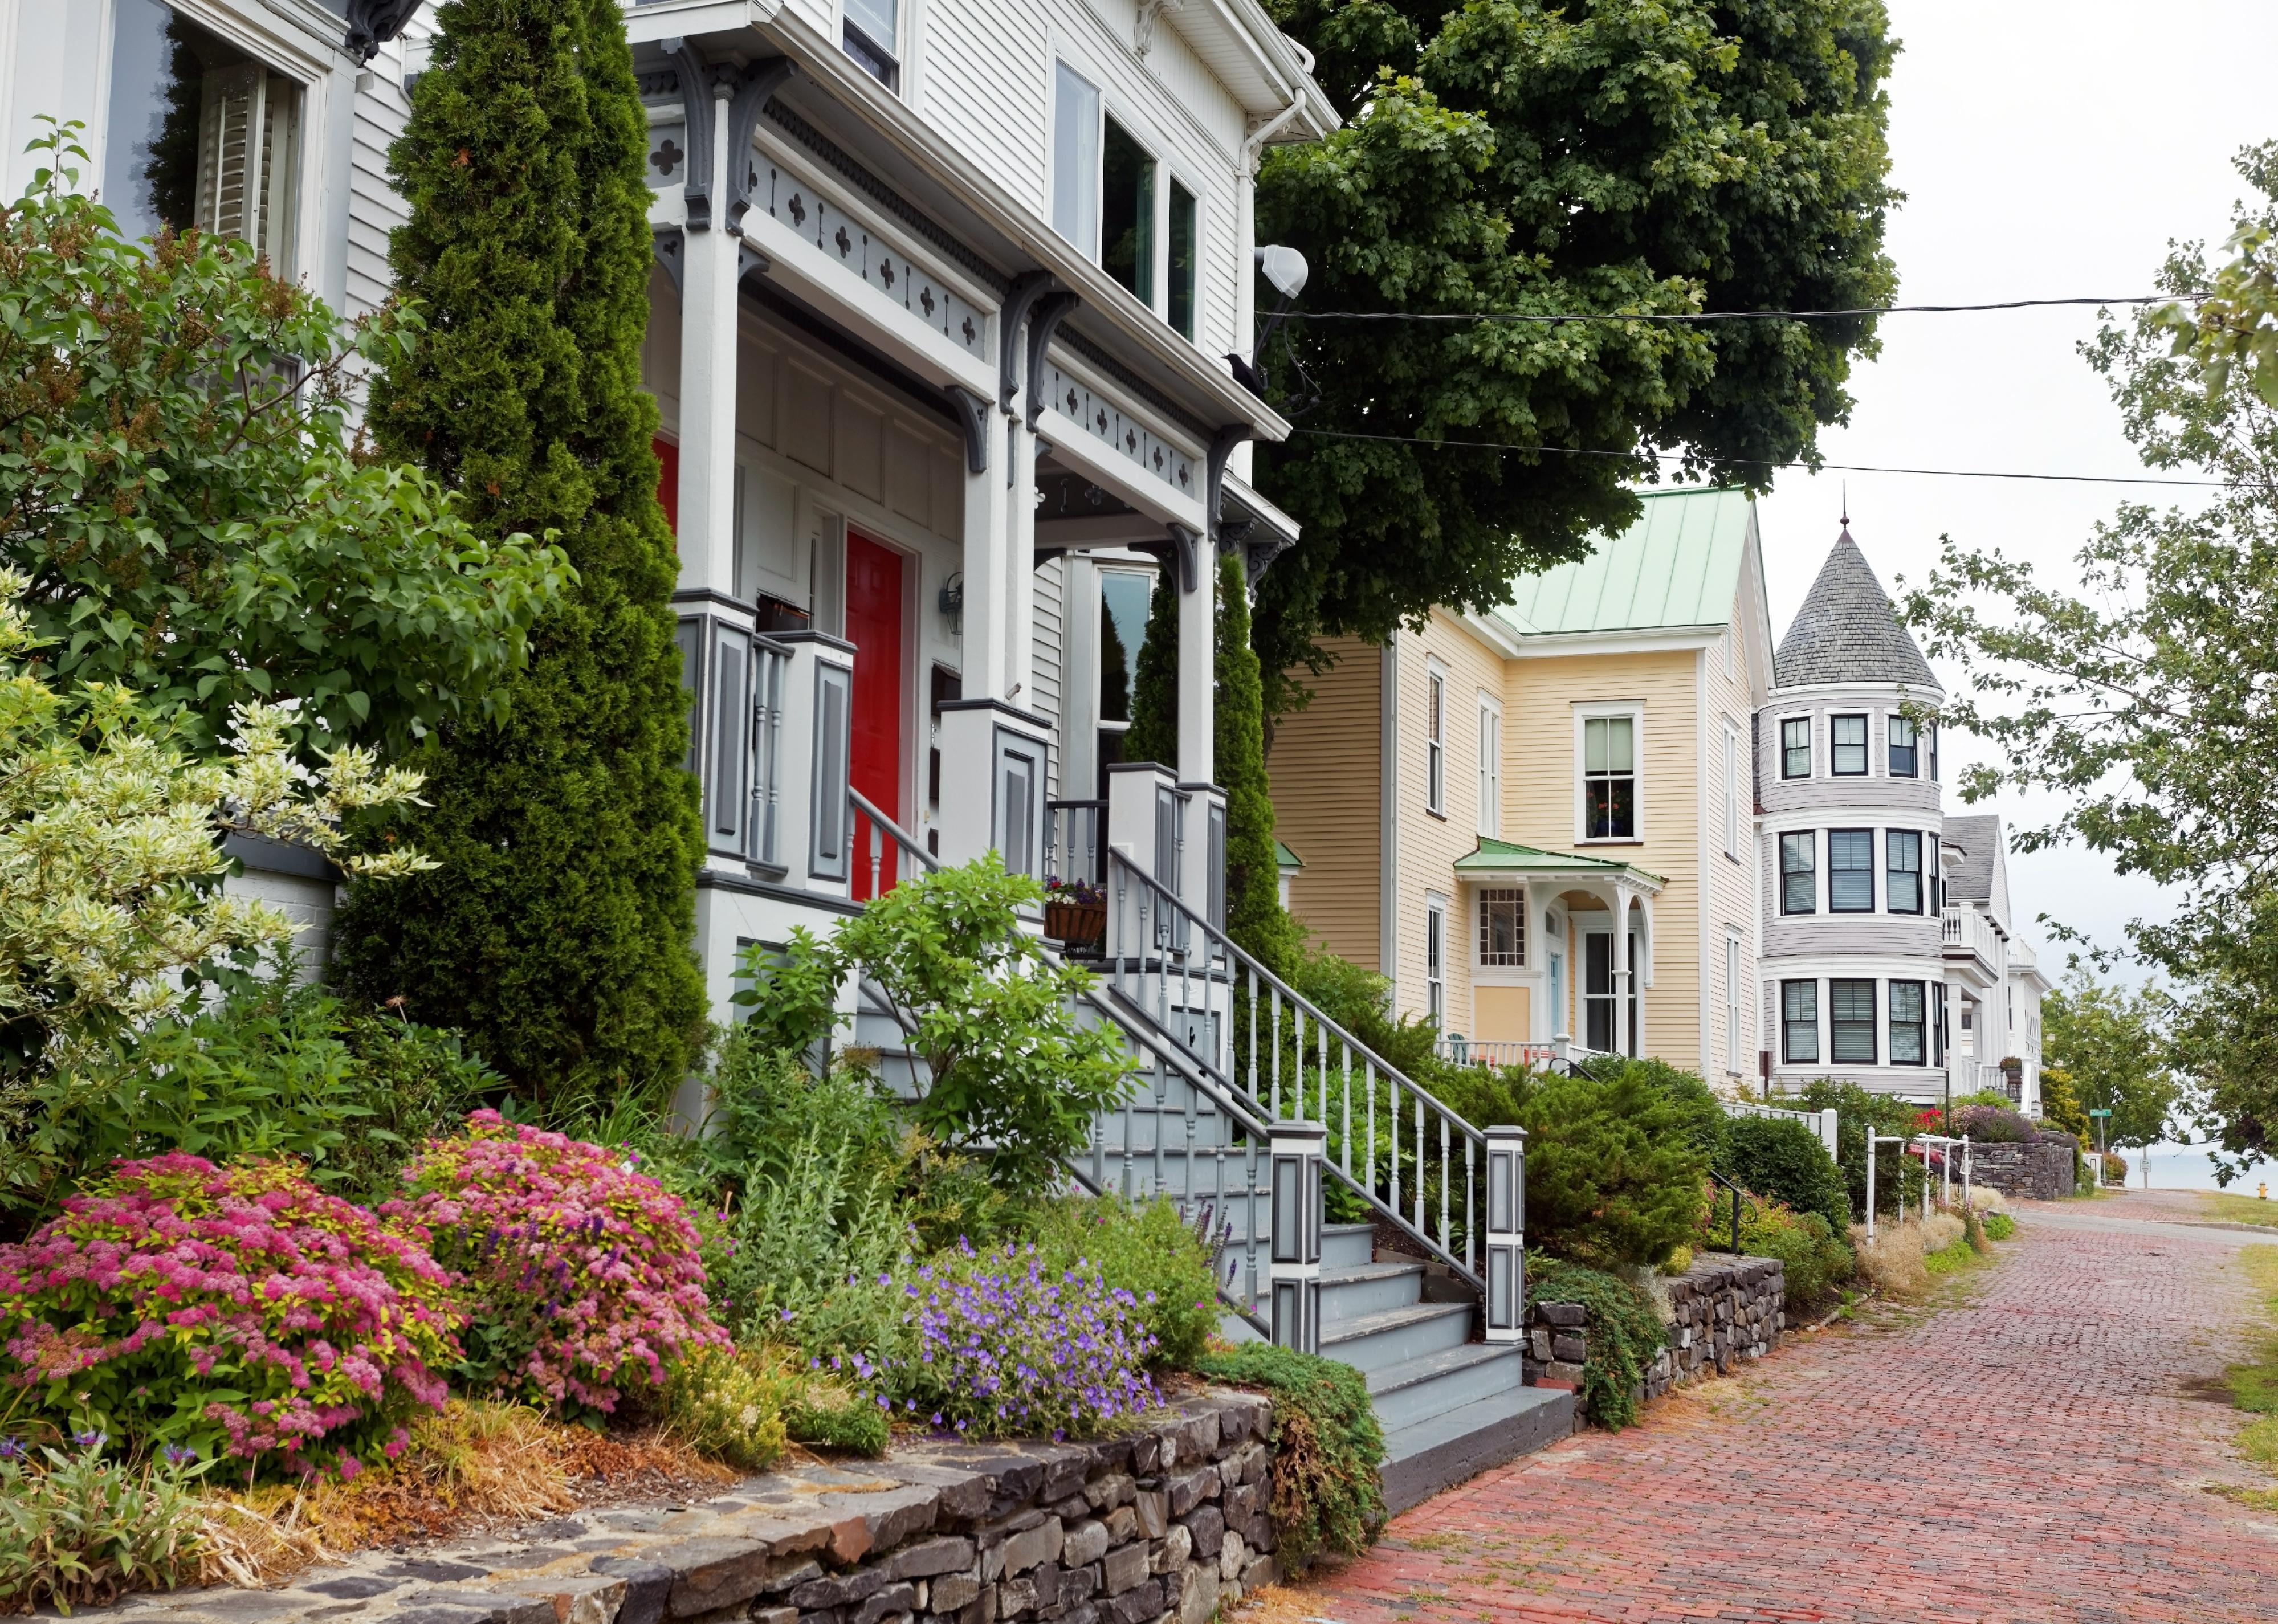 Residential neighborhood block in Portland, Maine.